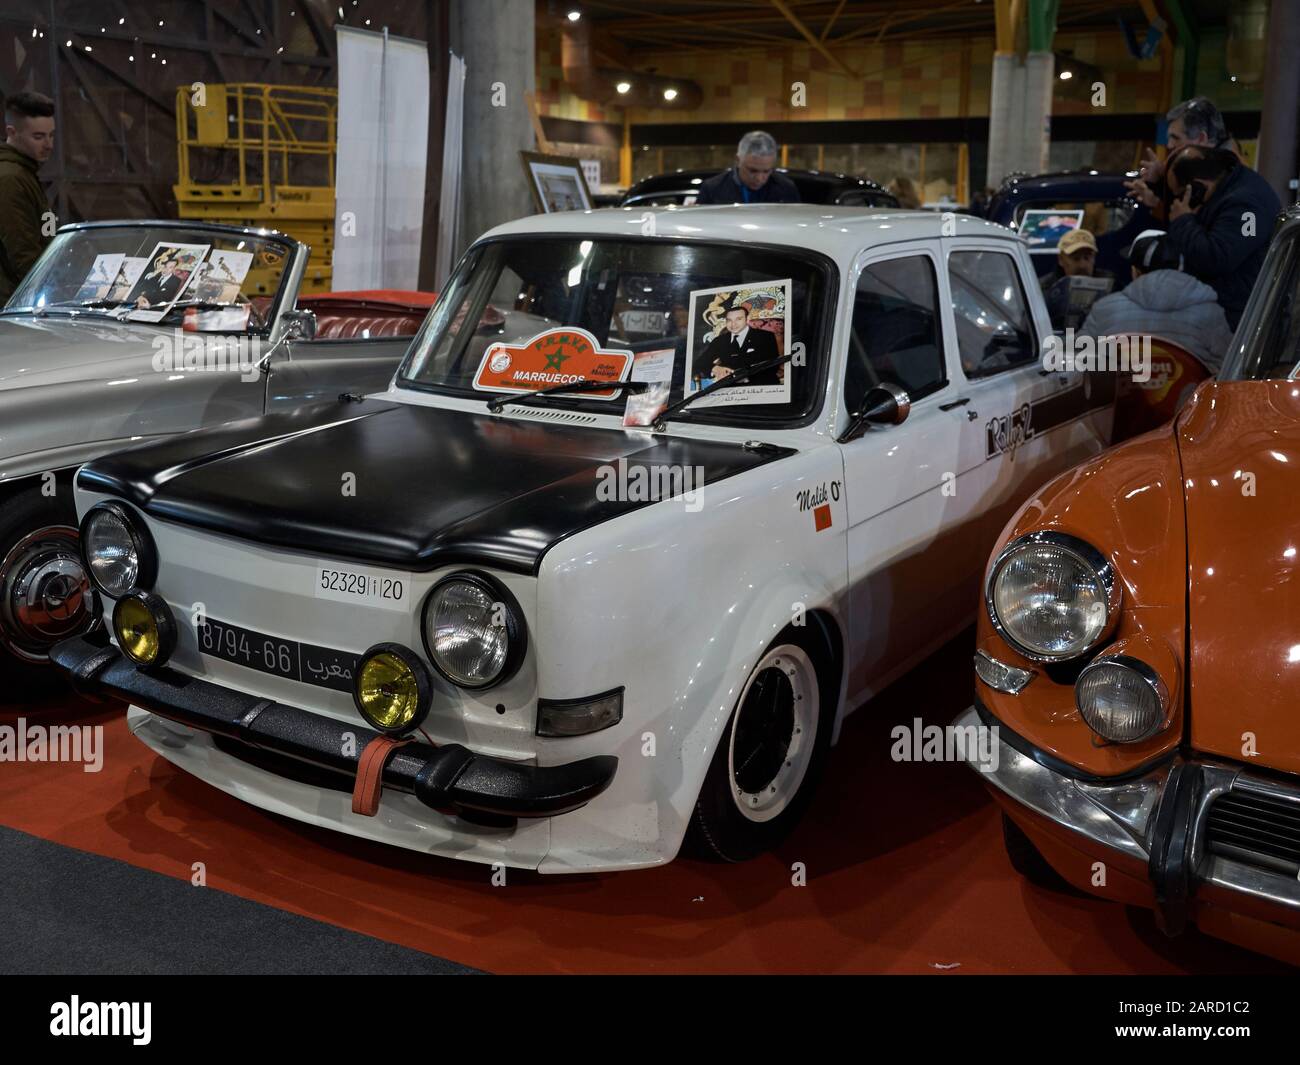 Simca rallye -Fotos und -Bildmaterial in hoher Auflösung – Alamy